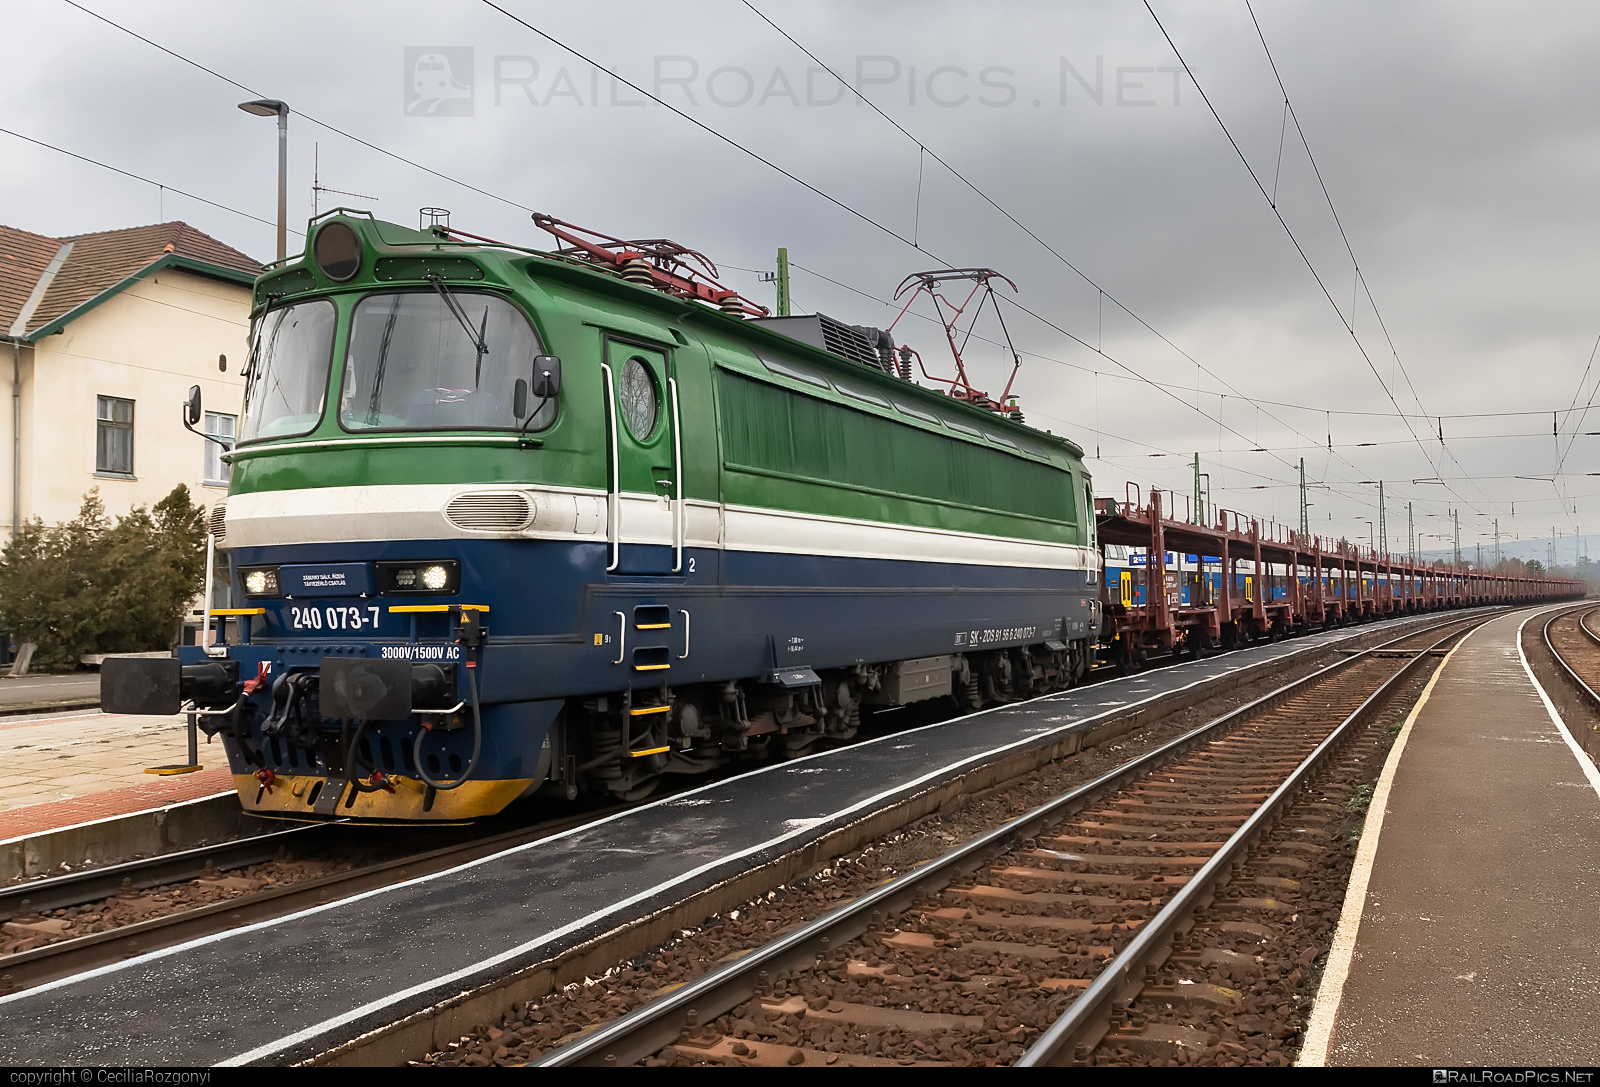 Škoda 47E - 240 073-7 operated by CRS- Continental Rail Services B.V. #carcarrierwagon #crs #laminatka #locomotive240 #skoda #skoda47e #zoszvolen